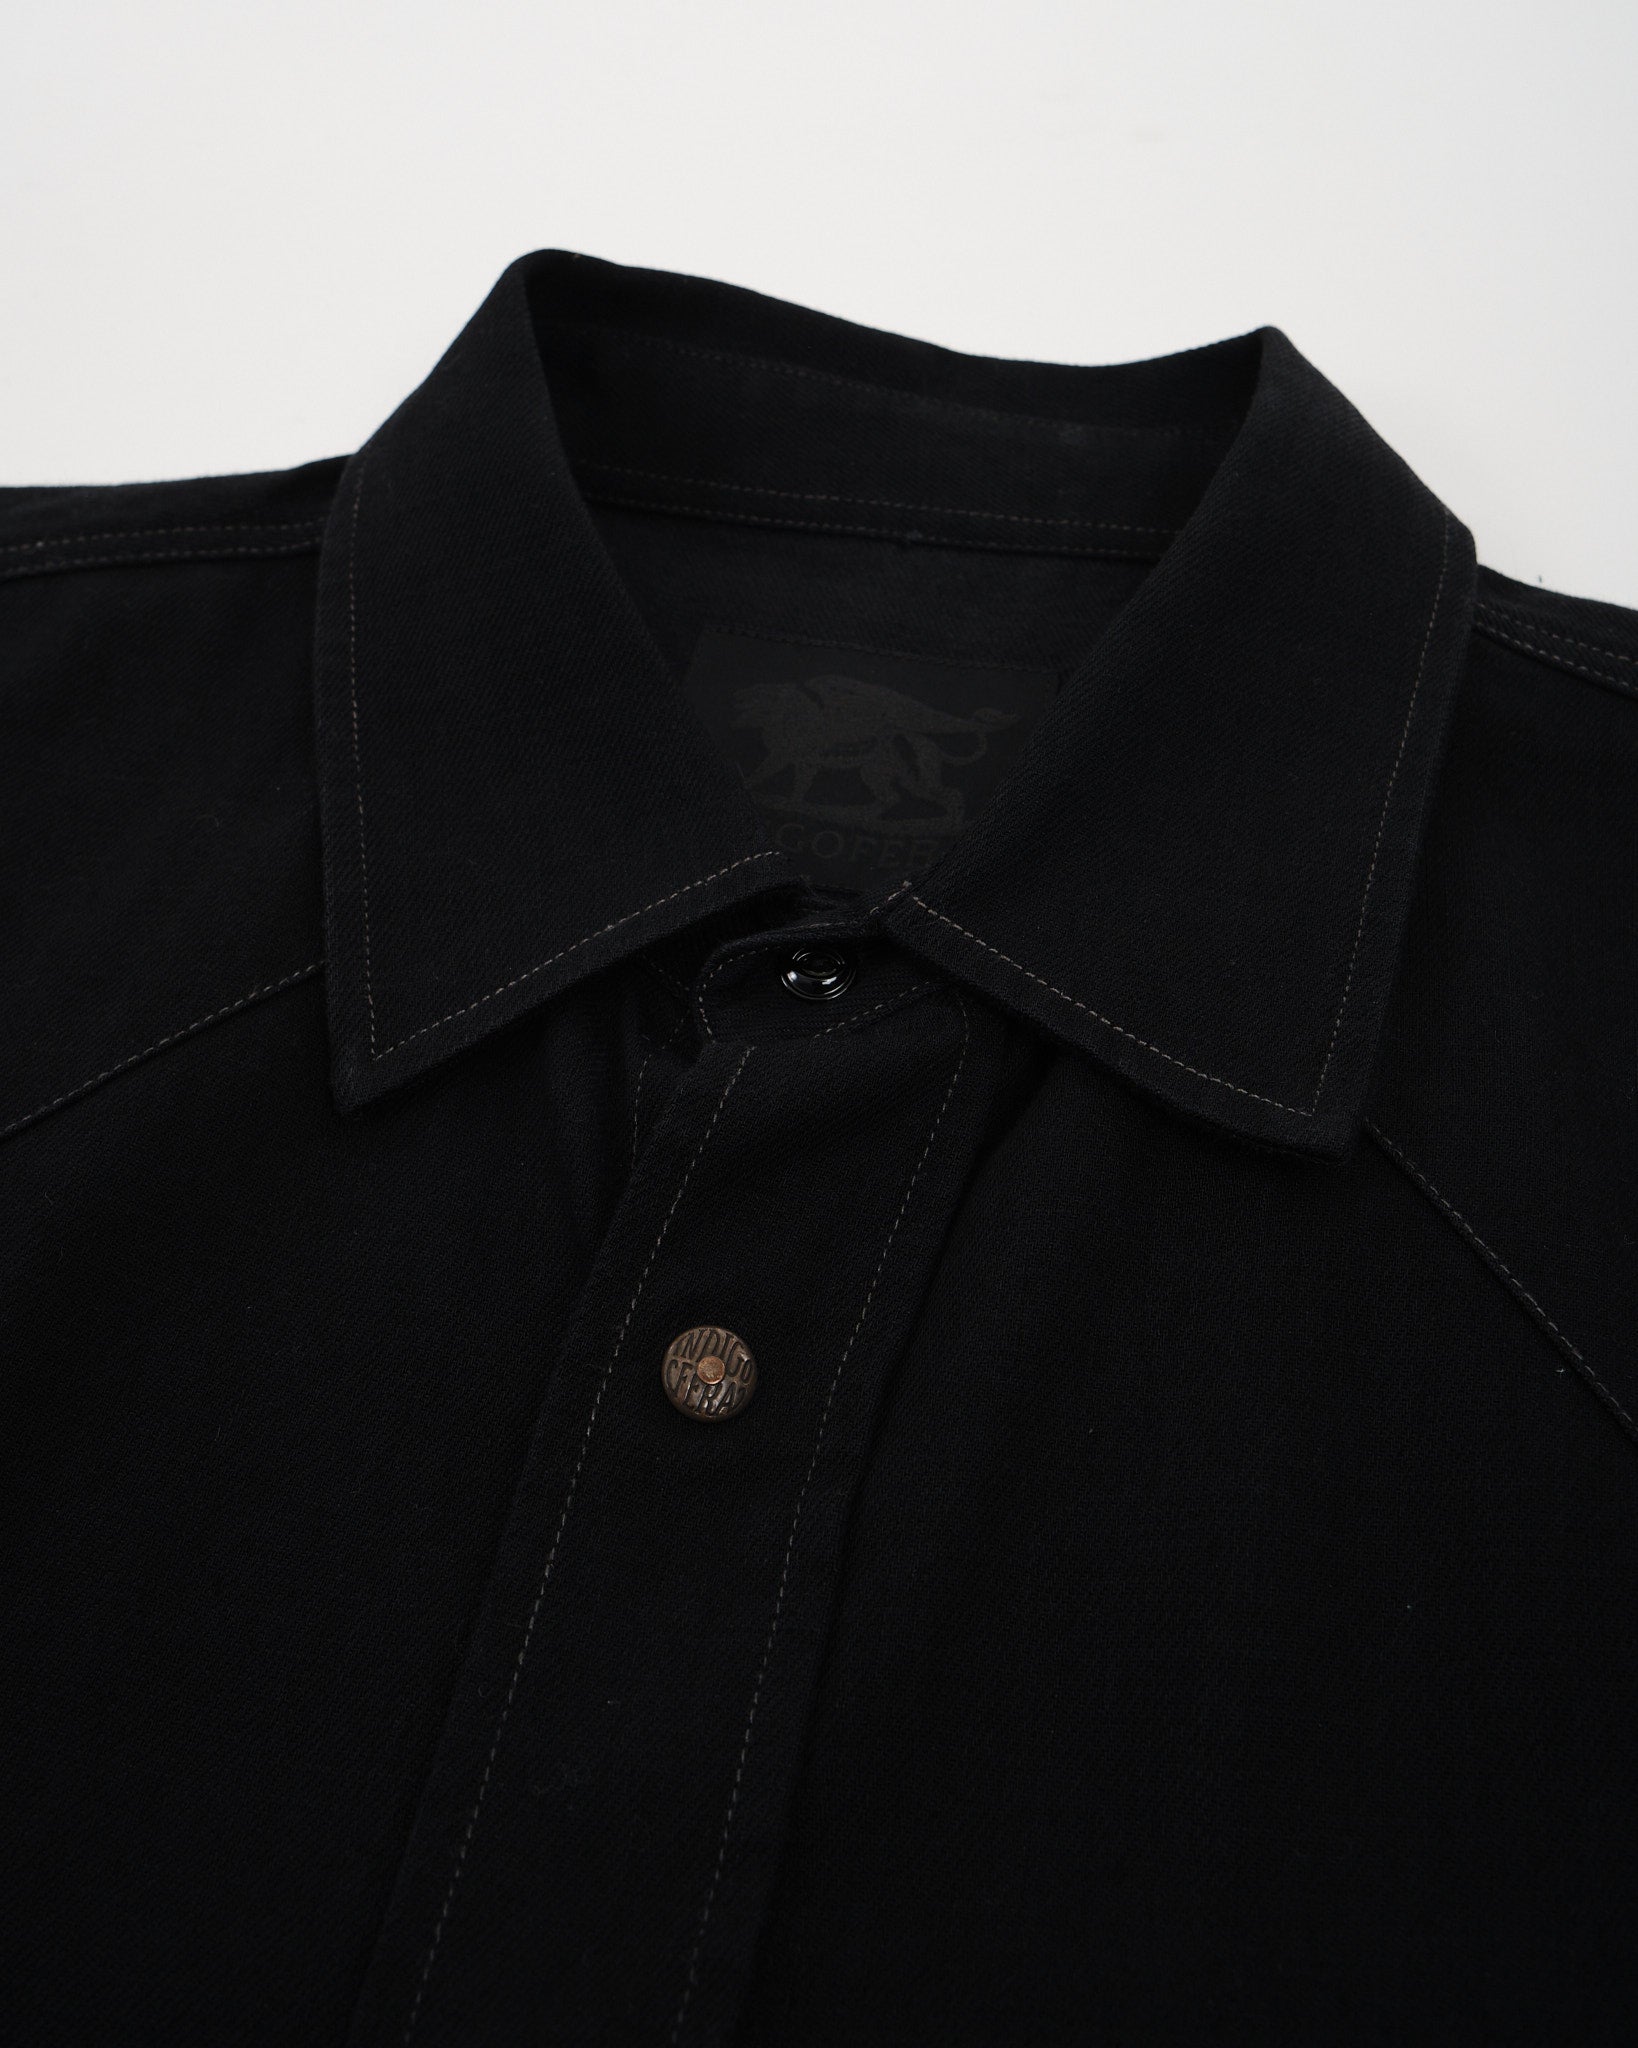 Ryman Shirt 8 oz Kochi Black Denim Rinsed - Meadow